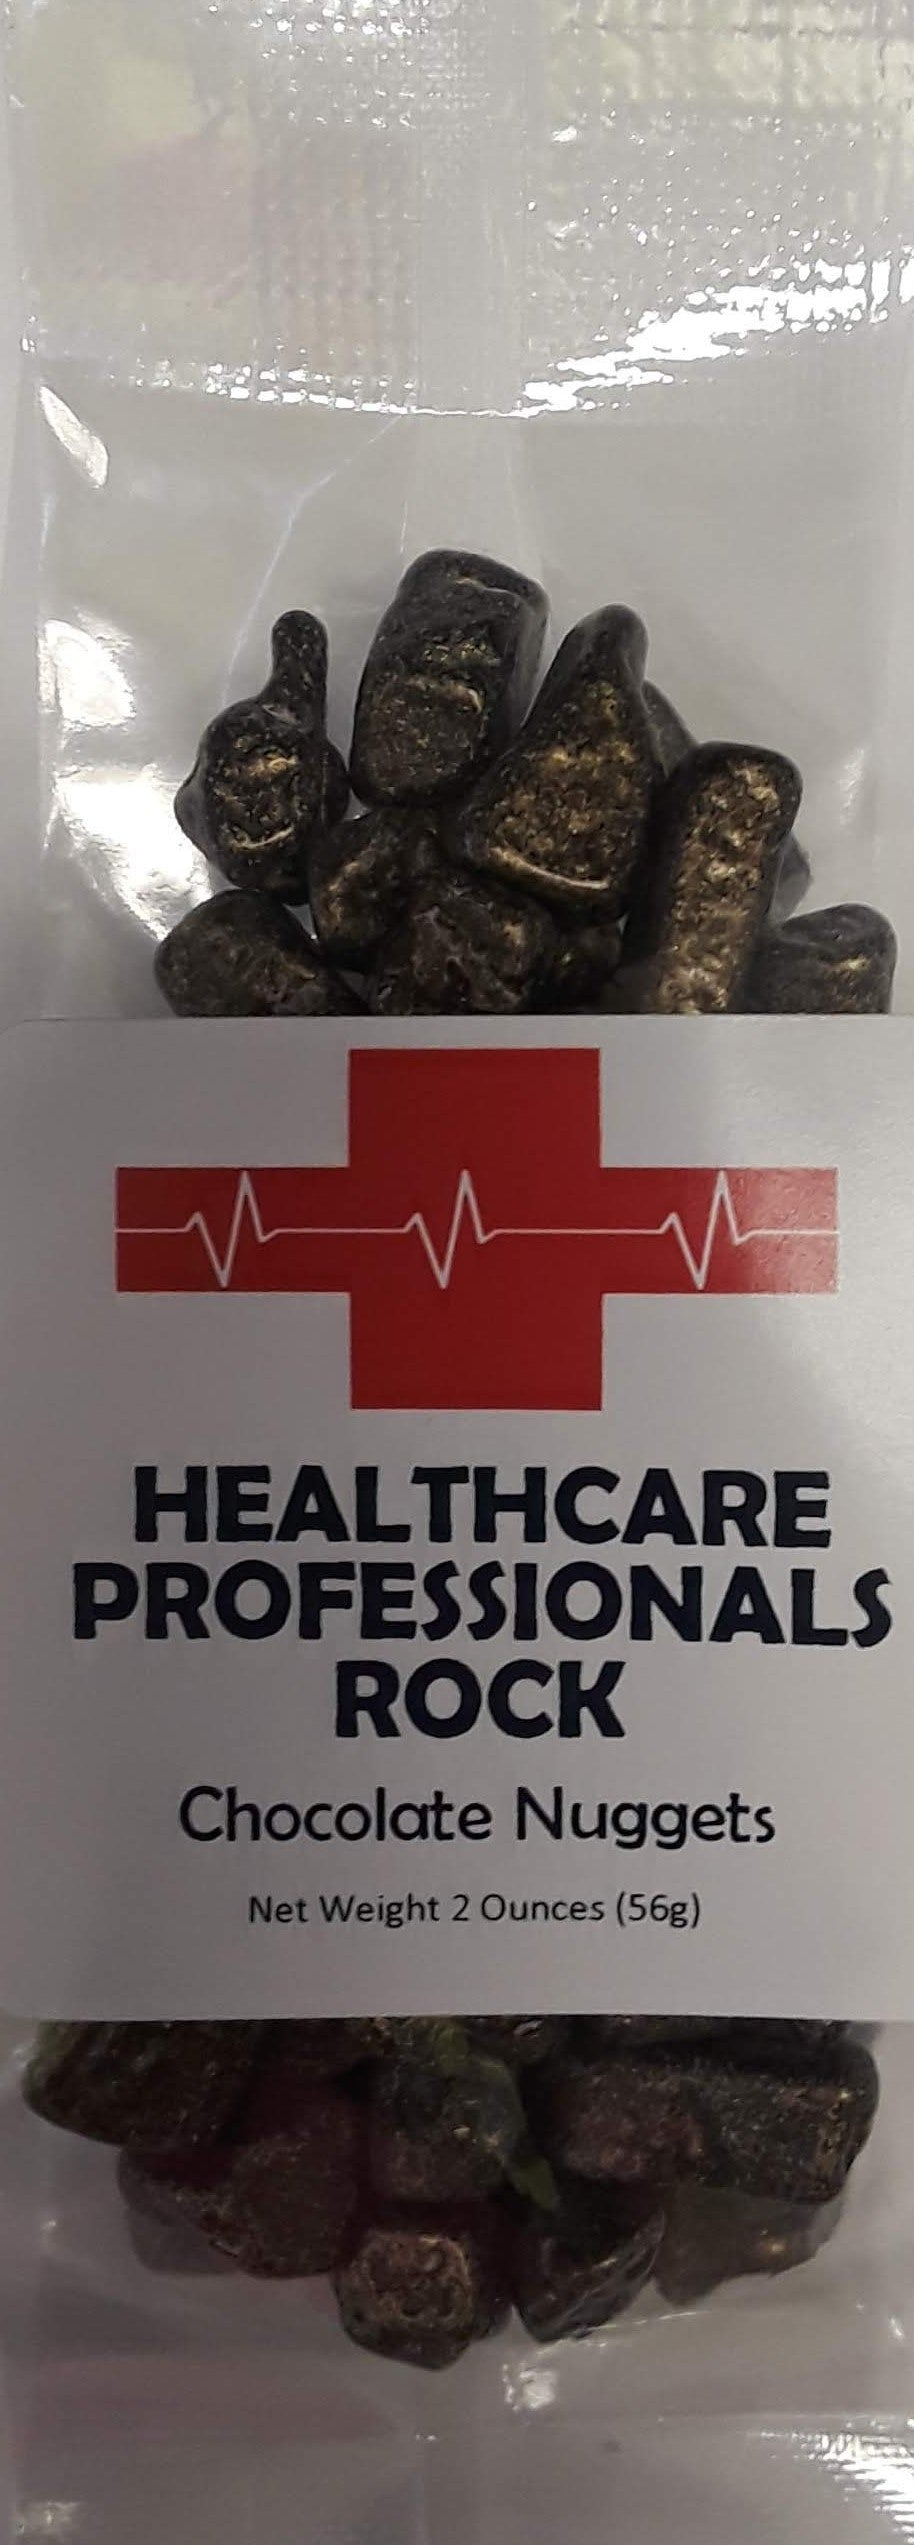 Healthcare Professionals Rock - Taste Of The Rockies